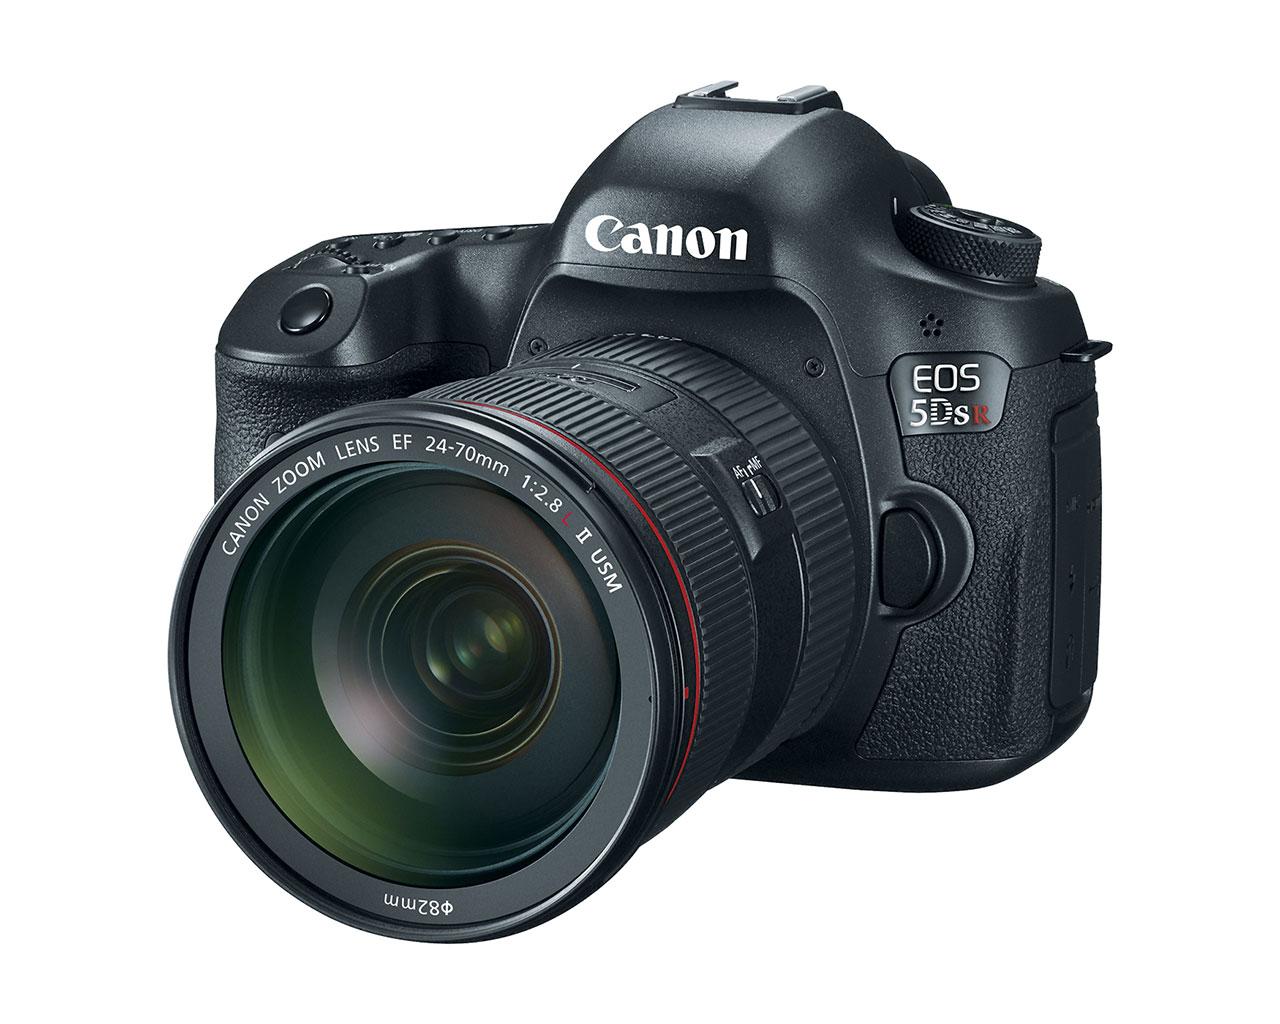 bijstand Donder voetstuk Canon unveils 2015 camera lineup: 5DS, Rebel T6s, ELPH, SX410 - SlashGear